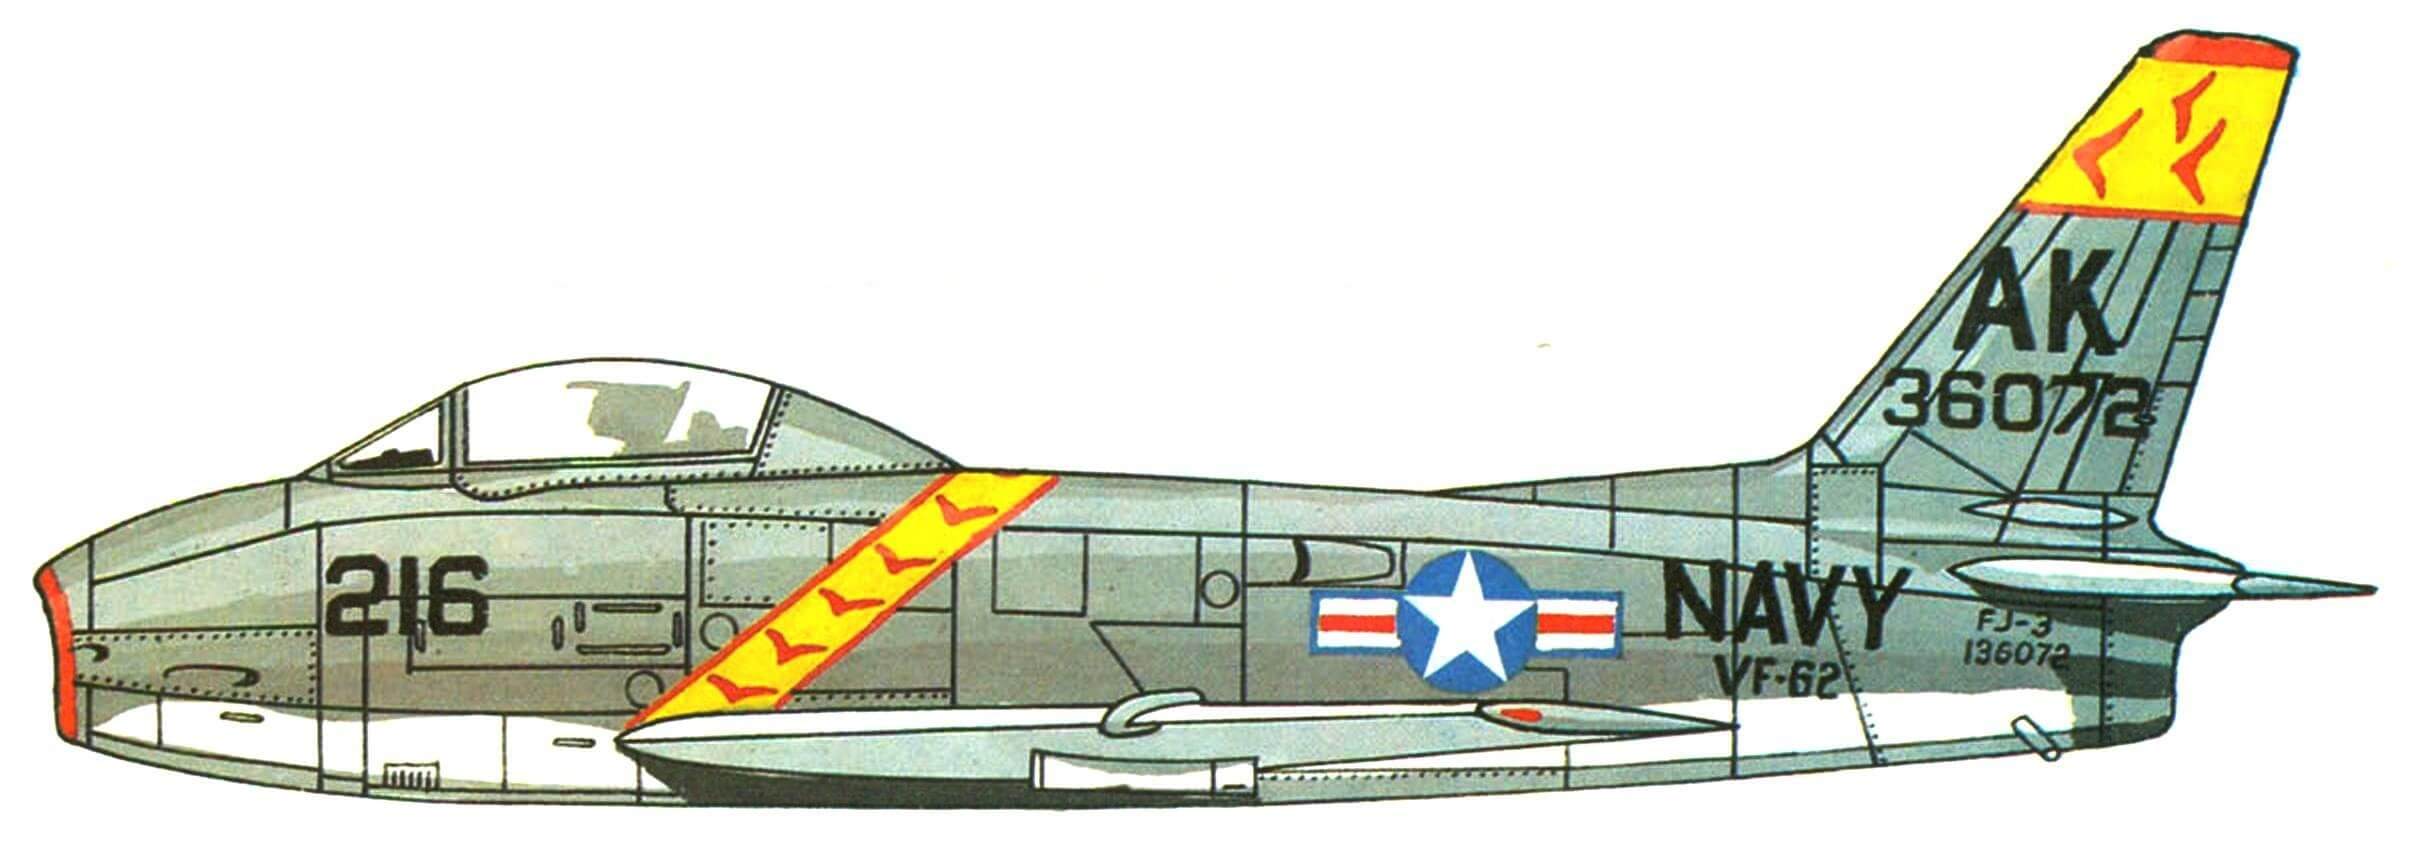 FJ-3 эскадрильи VF-62, авианосец "Essex”, 1959г.